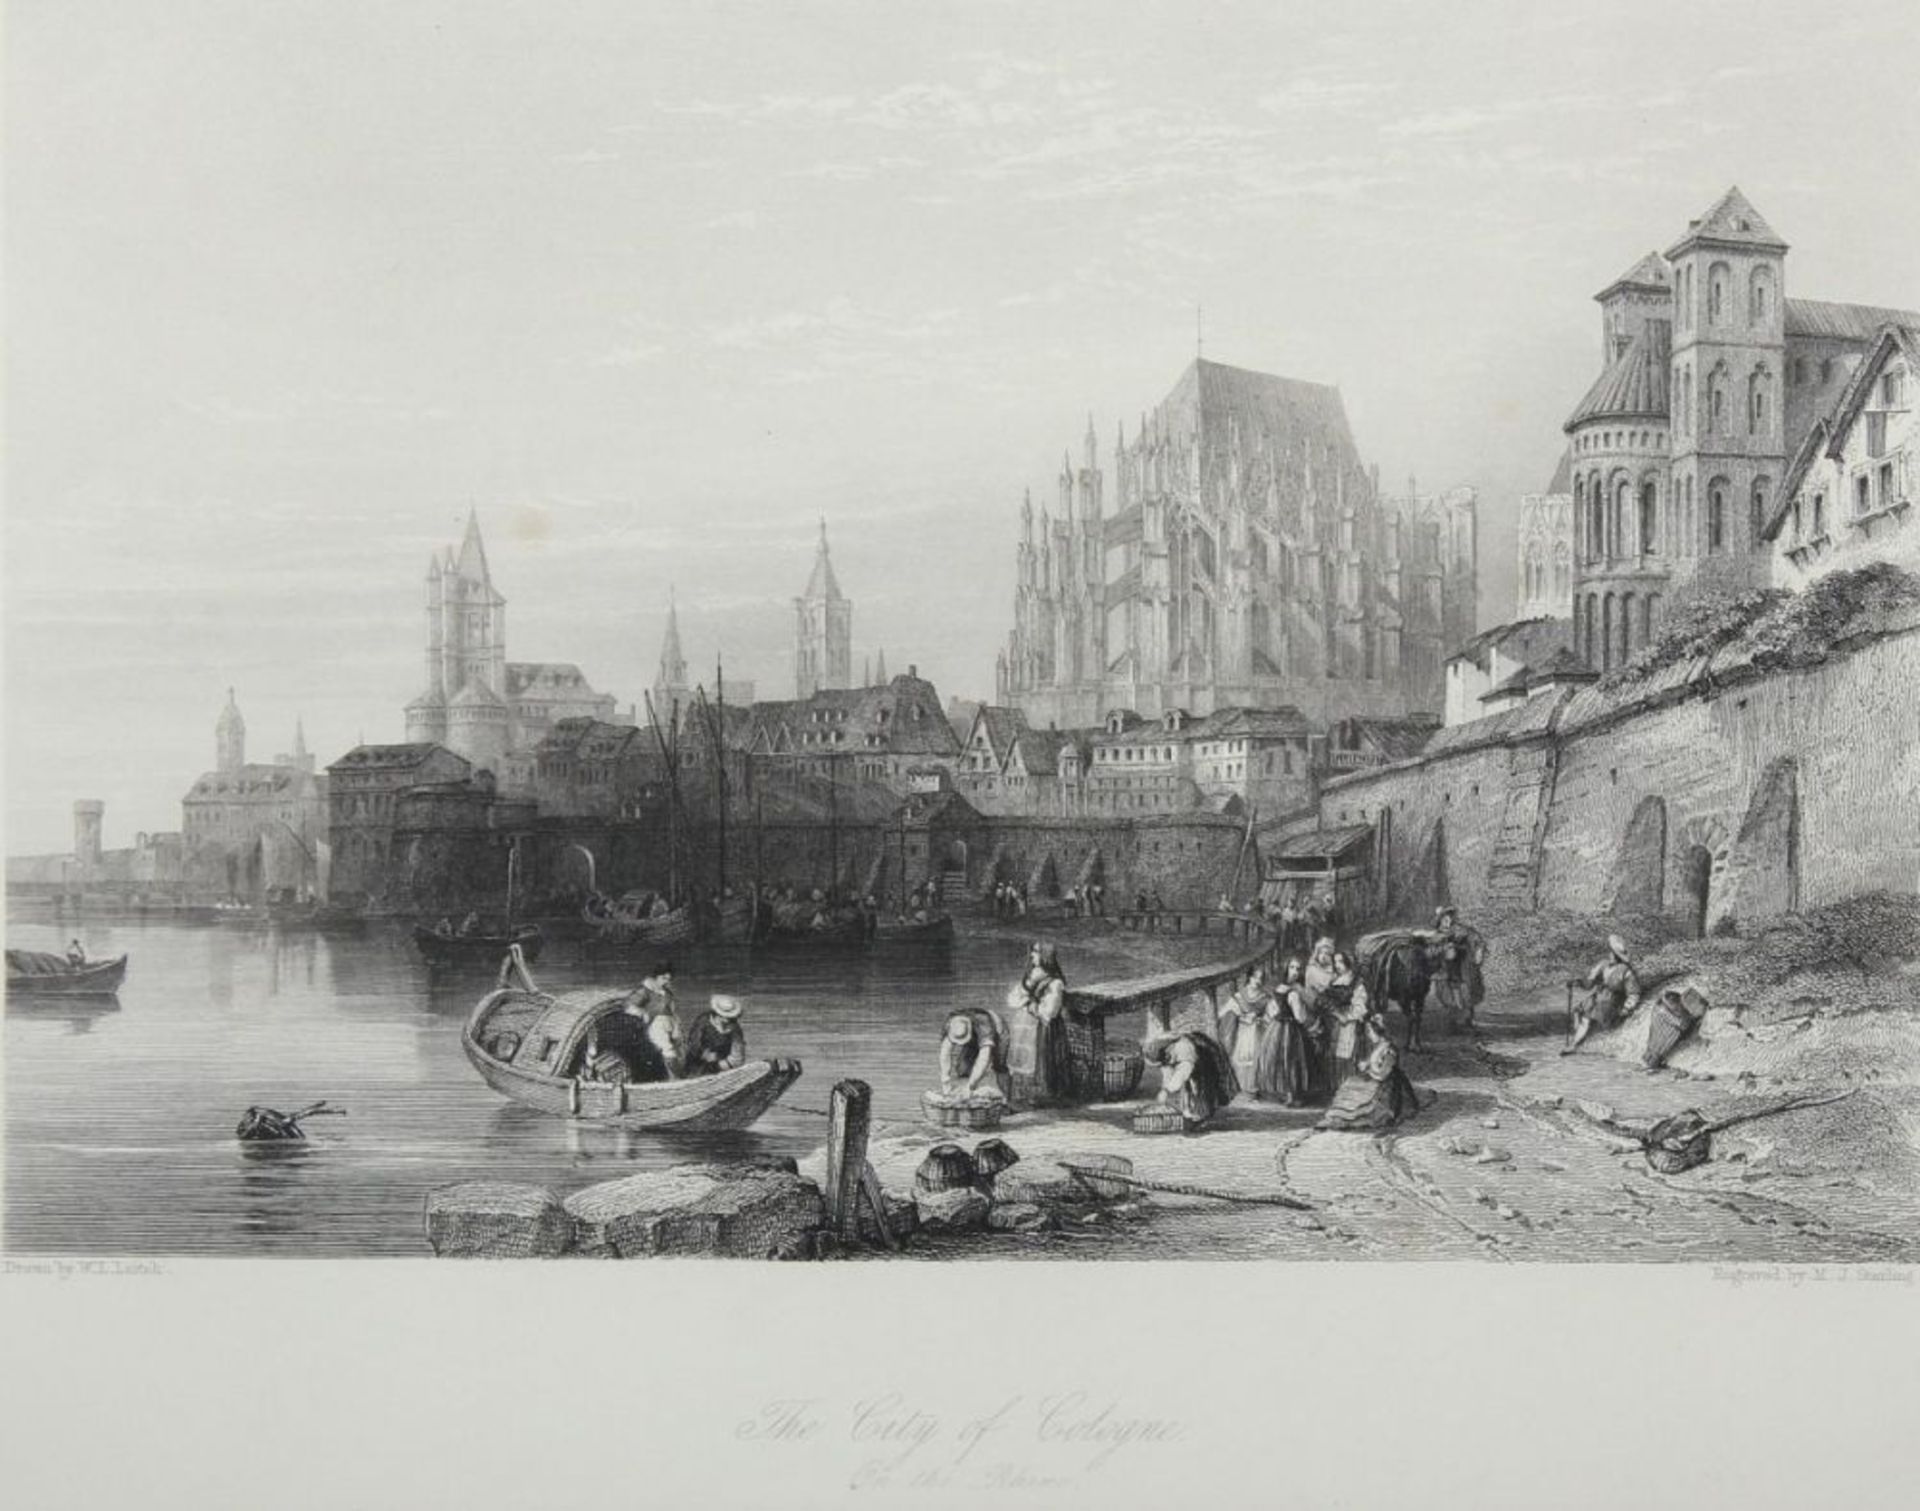 KÖLN, "The City of Cologne", Stahlstich, 13 x 19, von Starling nach Leitch, 1841, Boisserée-